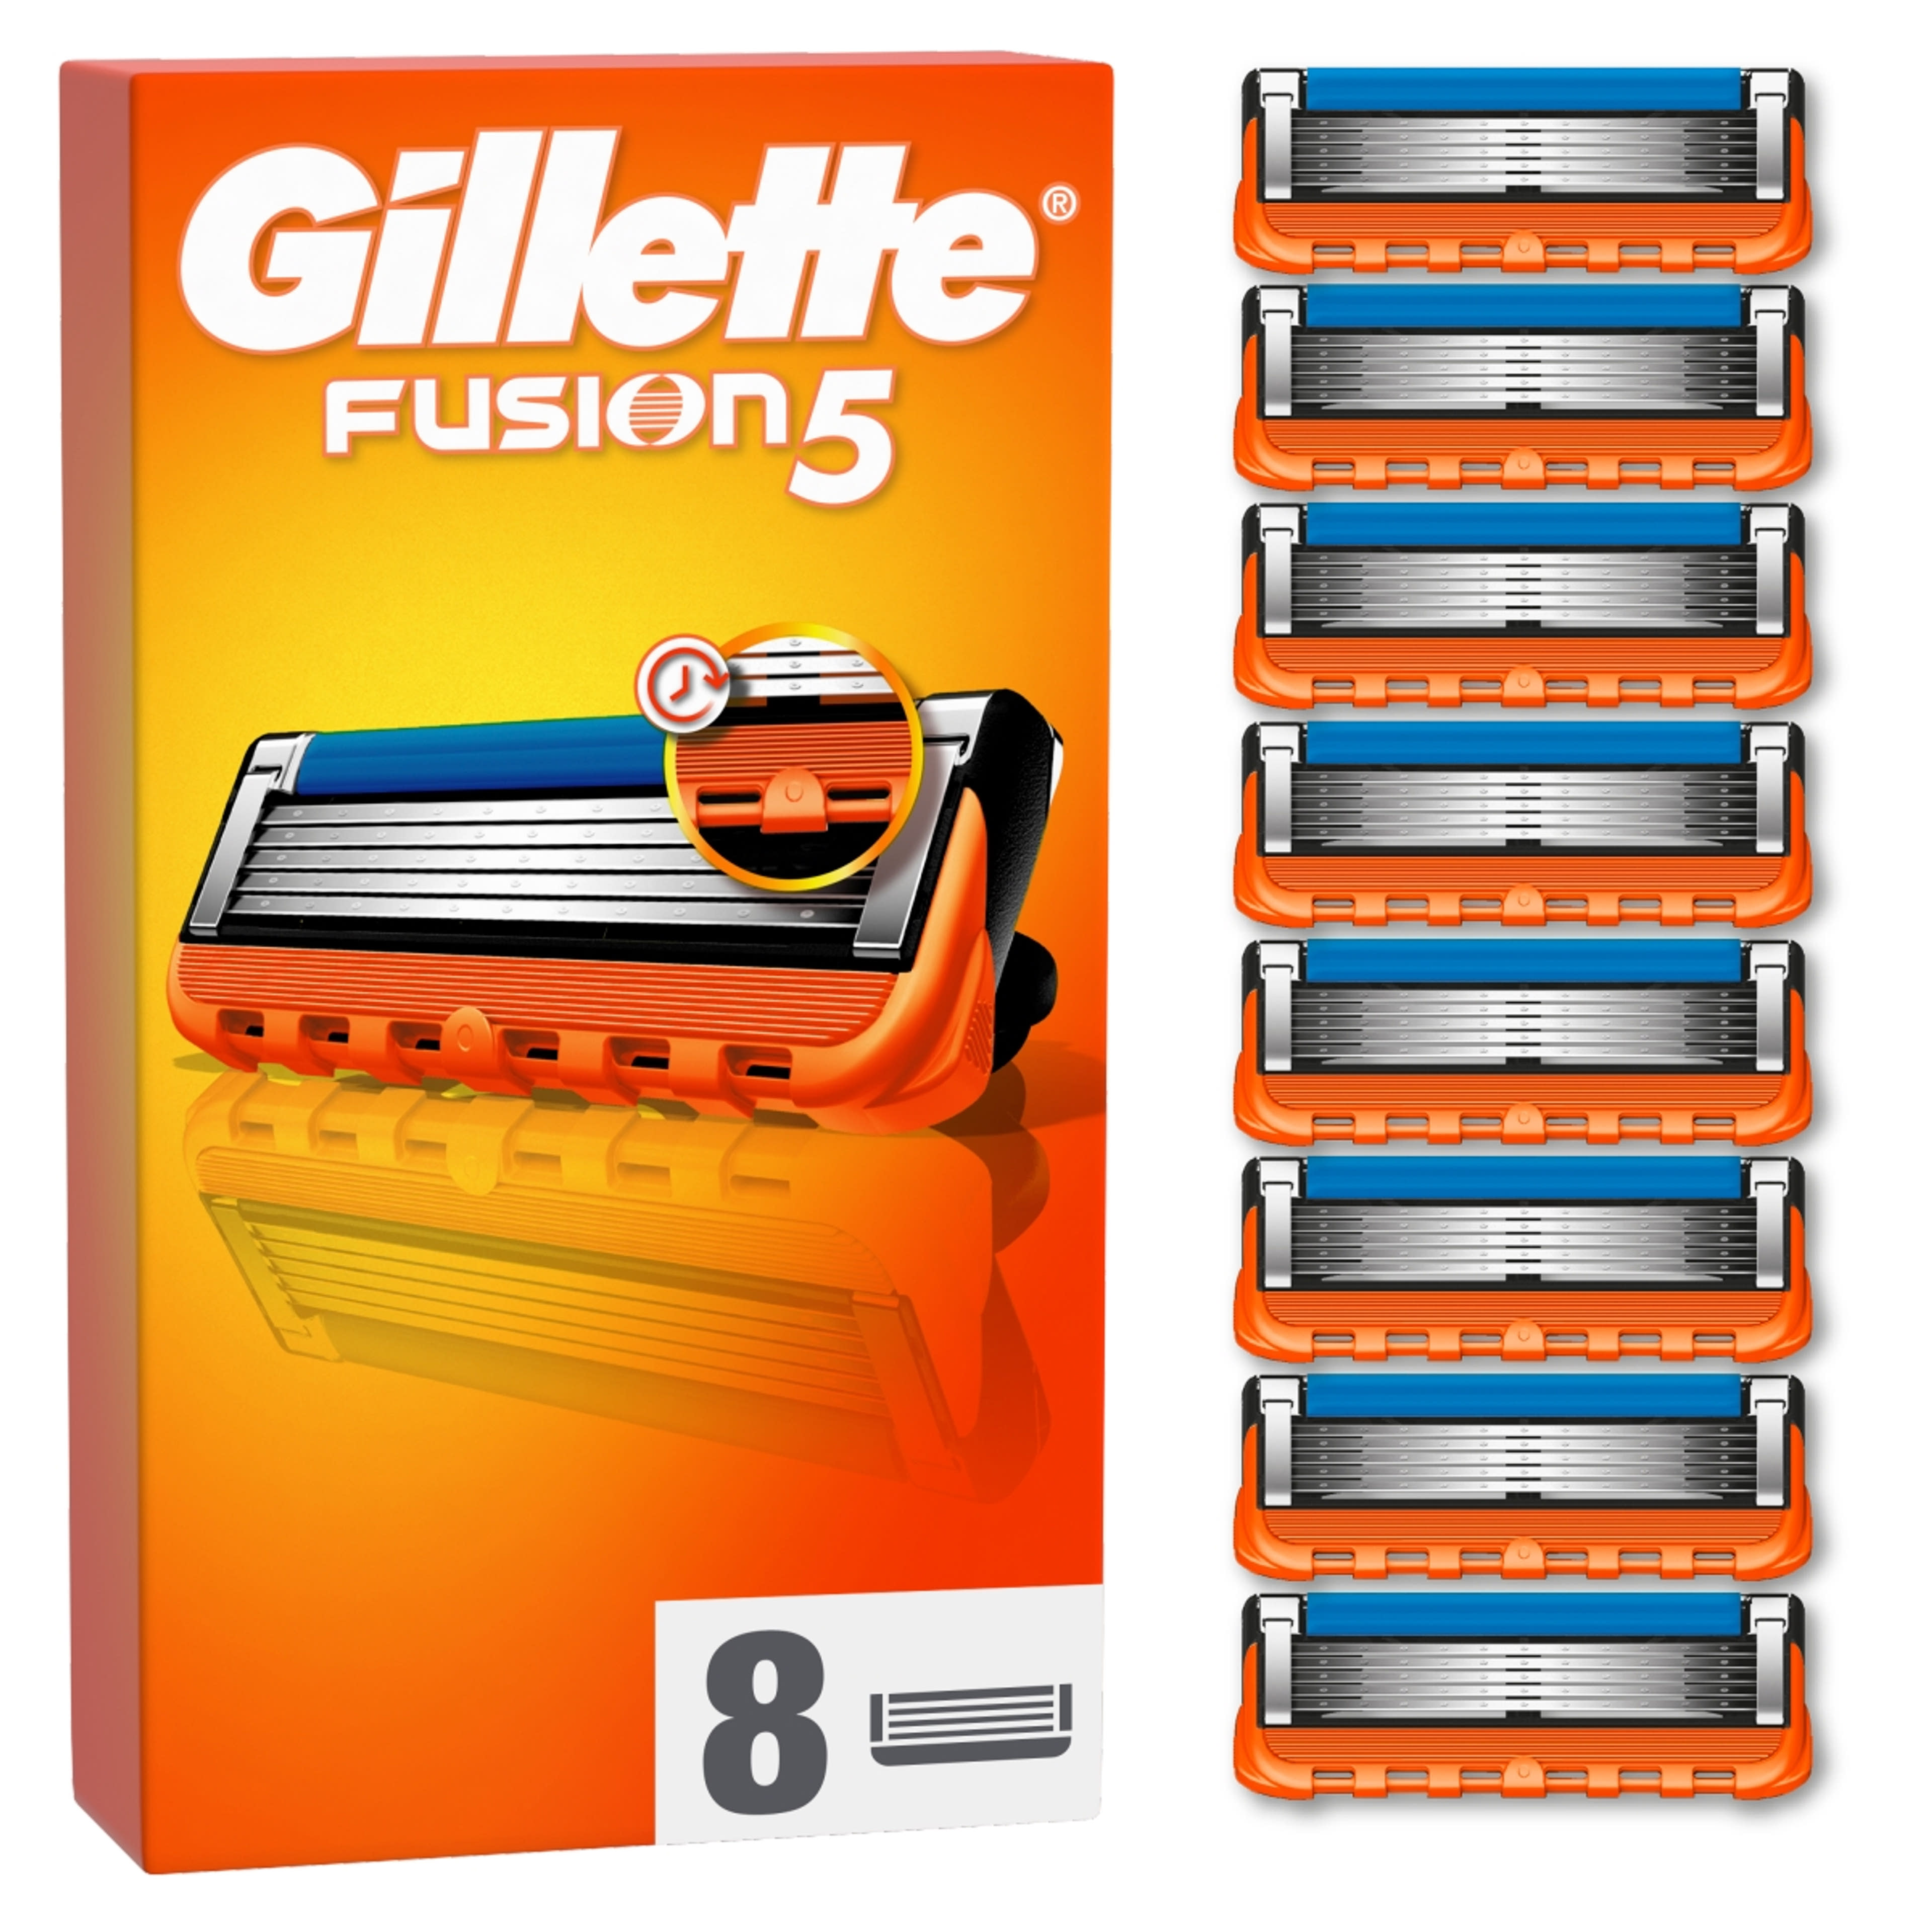 Gillette Fusion5 borotvabetétek férfi borotvához - 8 db-6